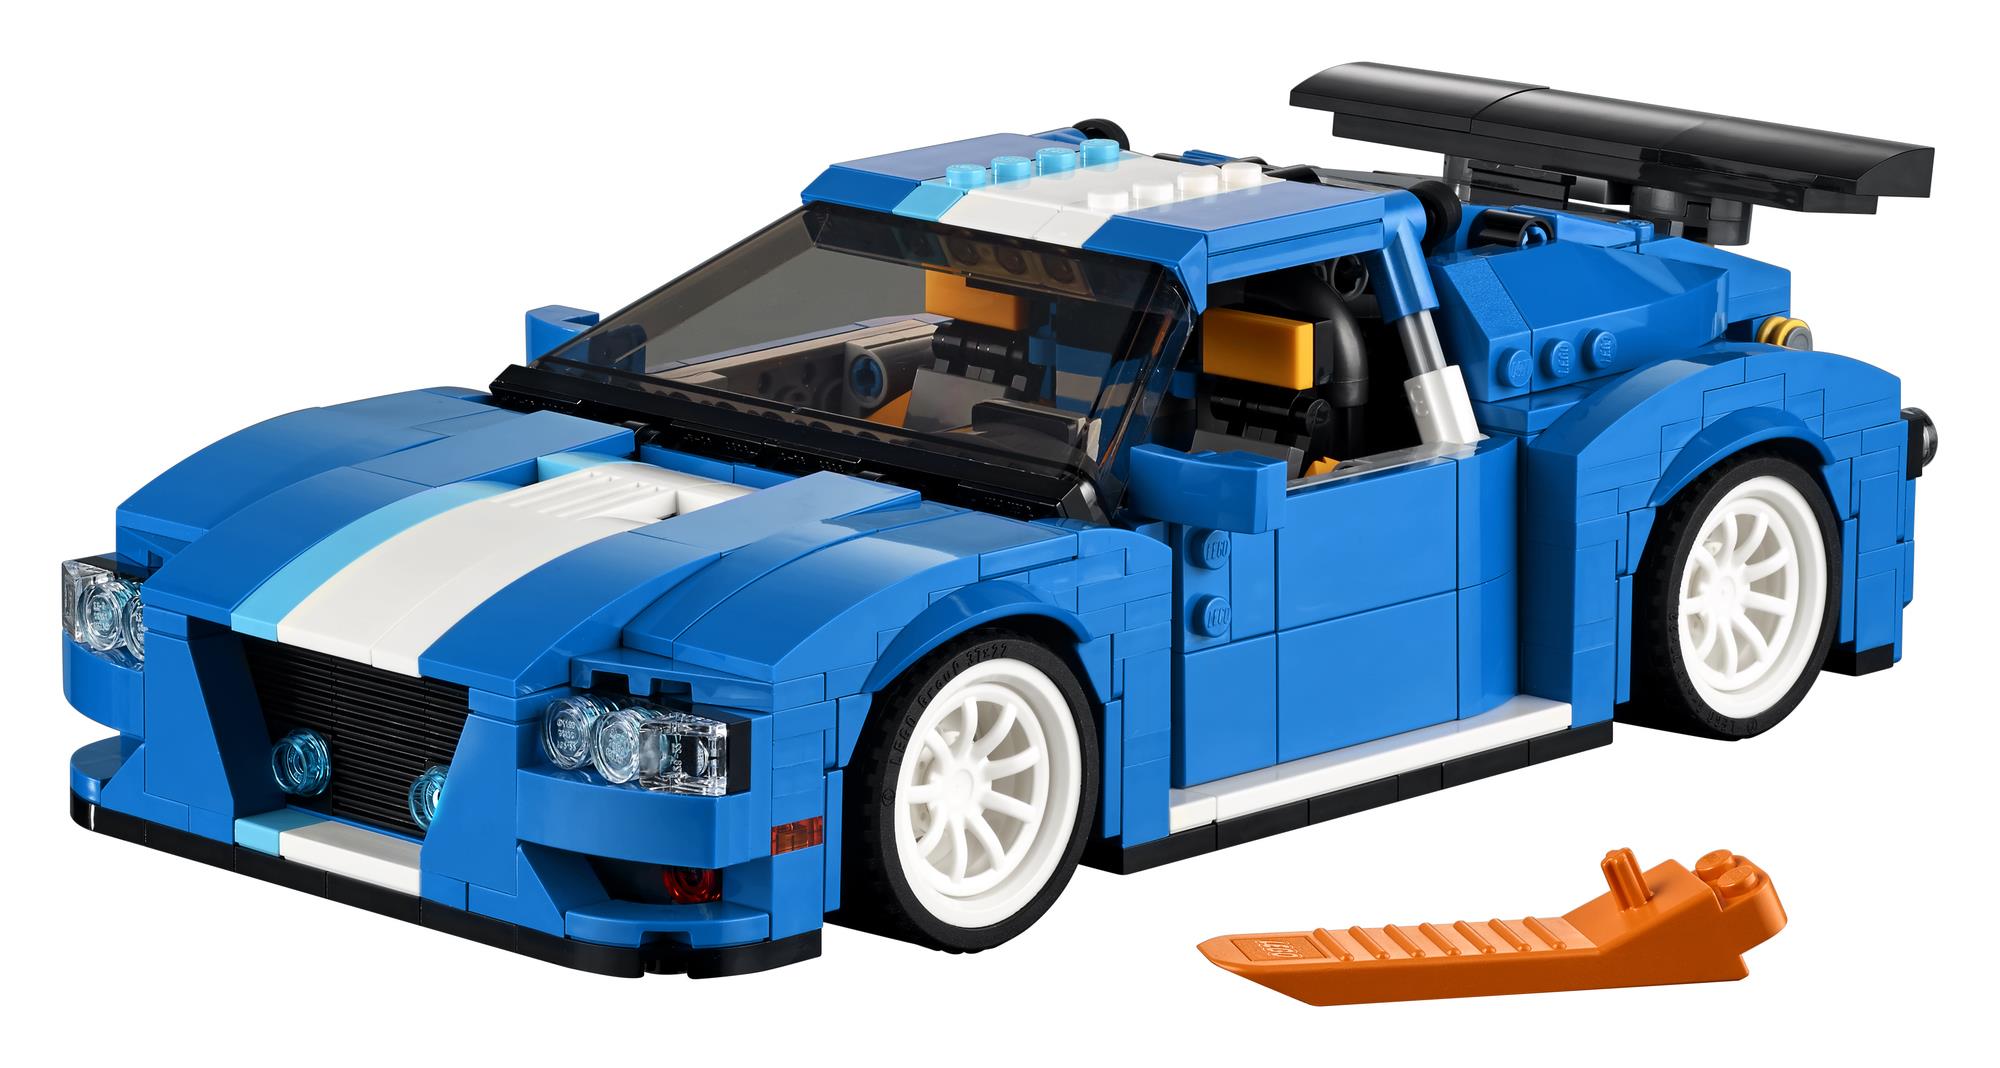 LEGO Creator Auto Da